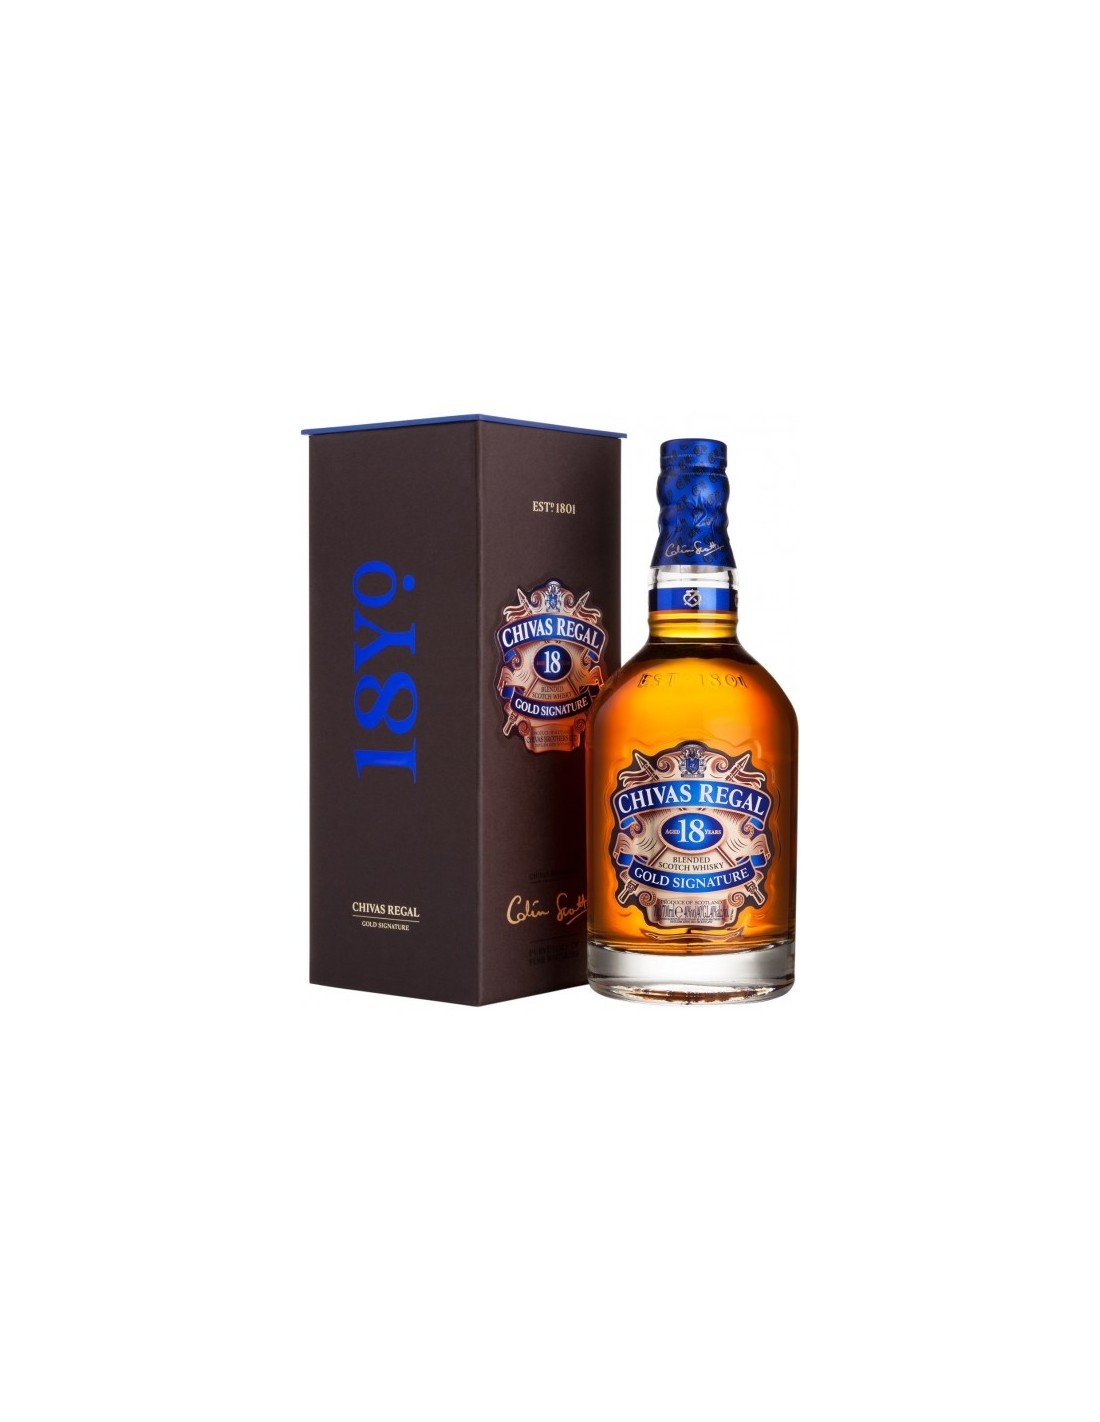 Whisky Chivas Regal 0.7L, 18 ani, 40% alc., Scotia